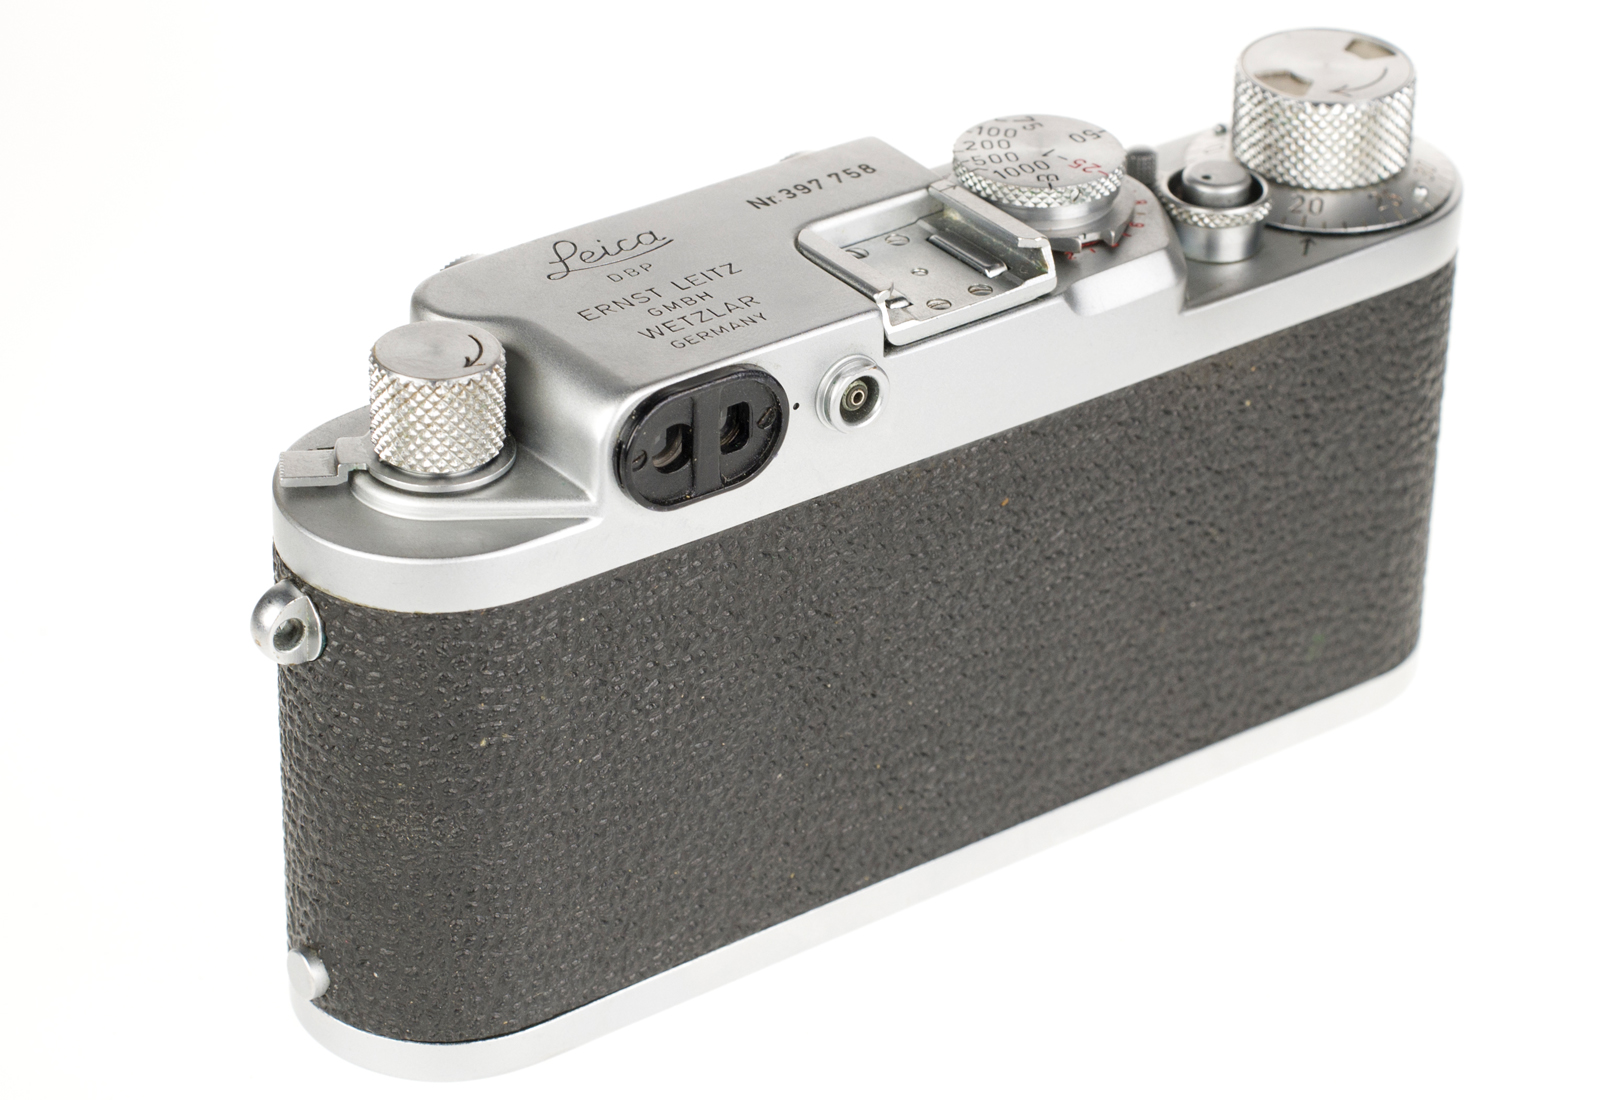 Leica IIIf Body, chrome Red Dial